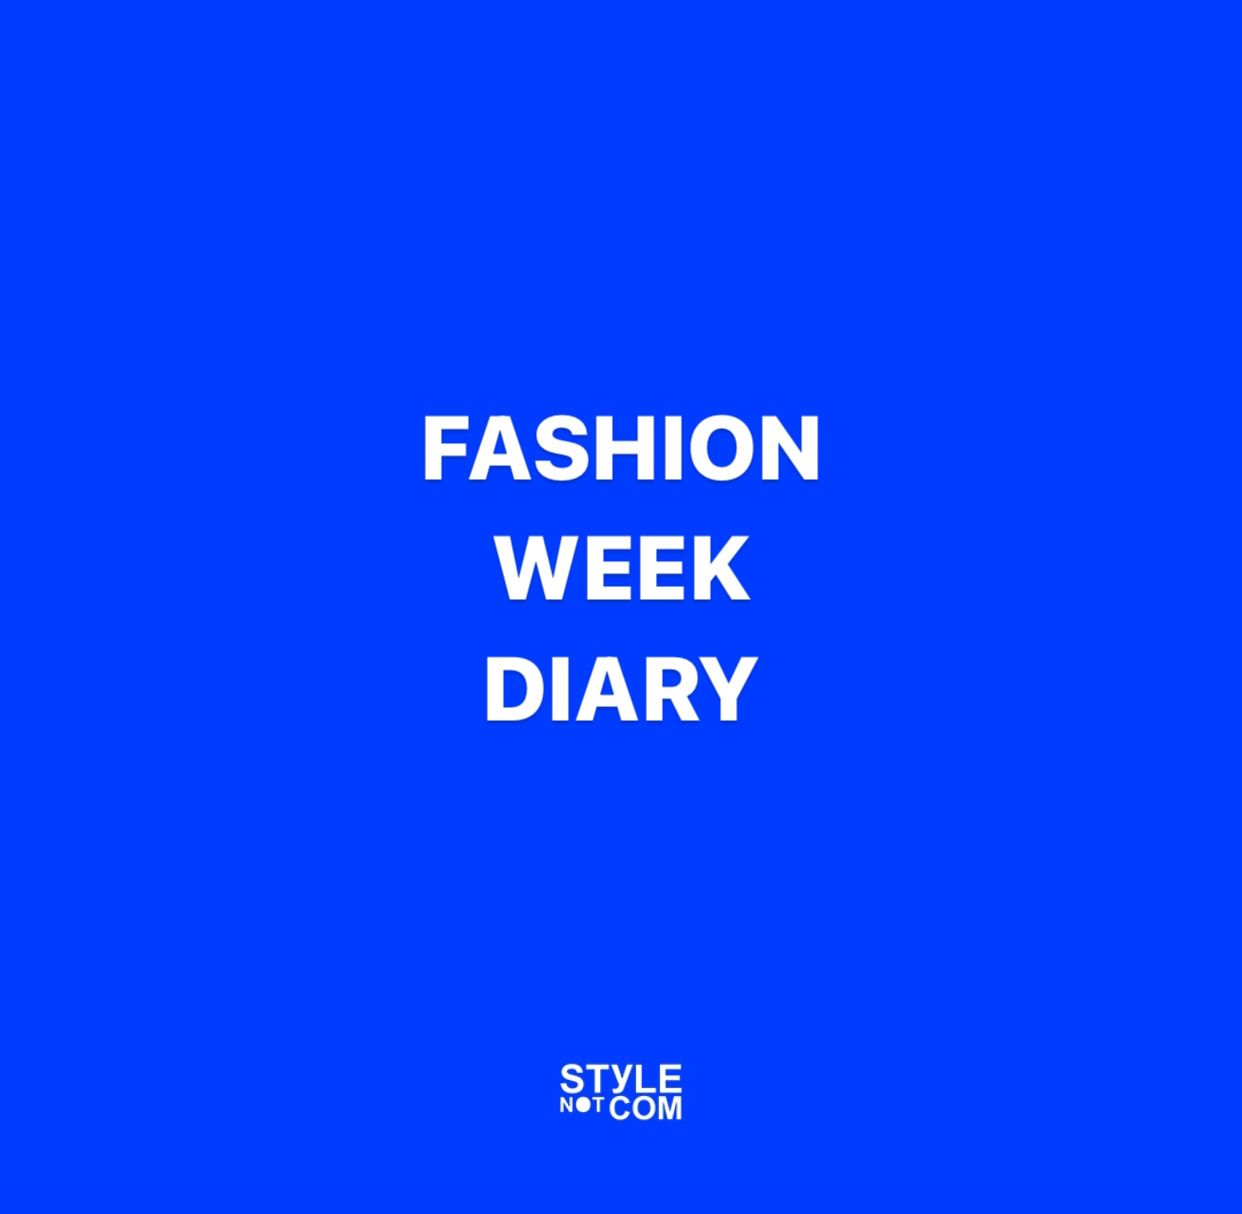 Fashion Week Diary: STYLE NOT COM - © System Magazine